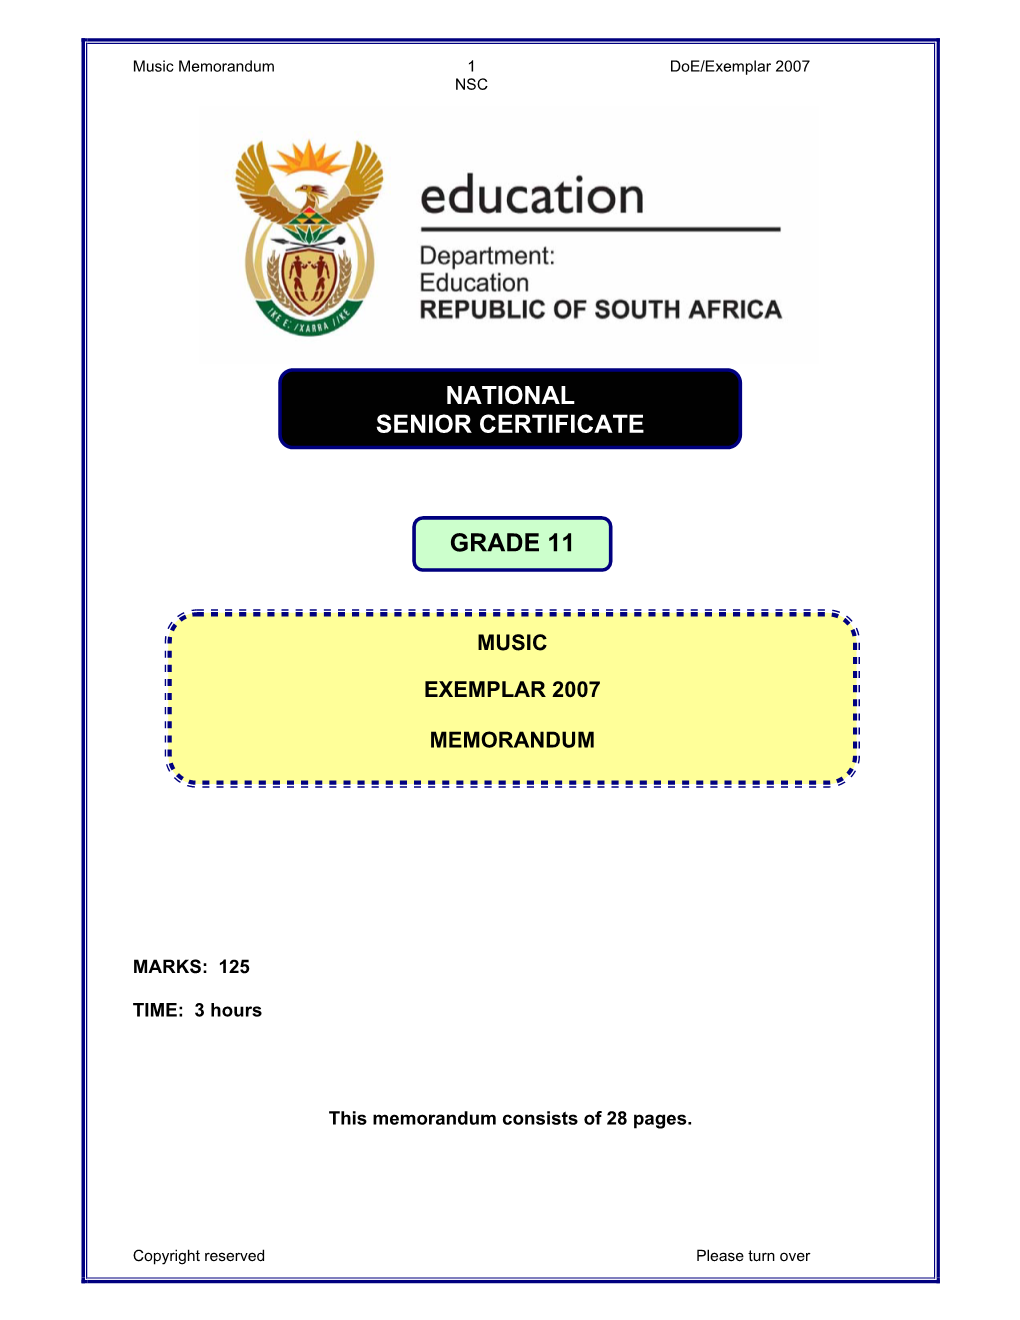 National Senior Certificate Grade 11